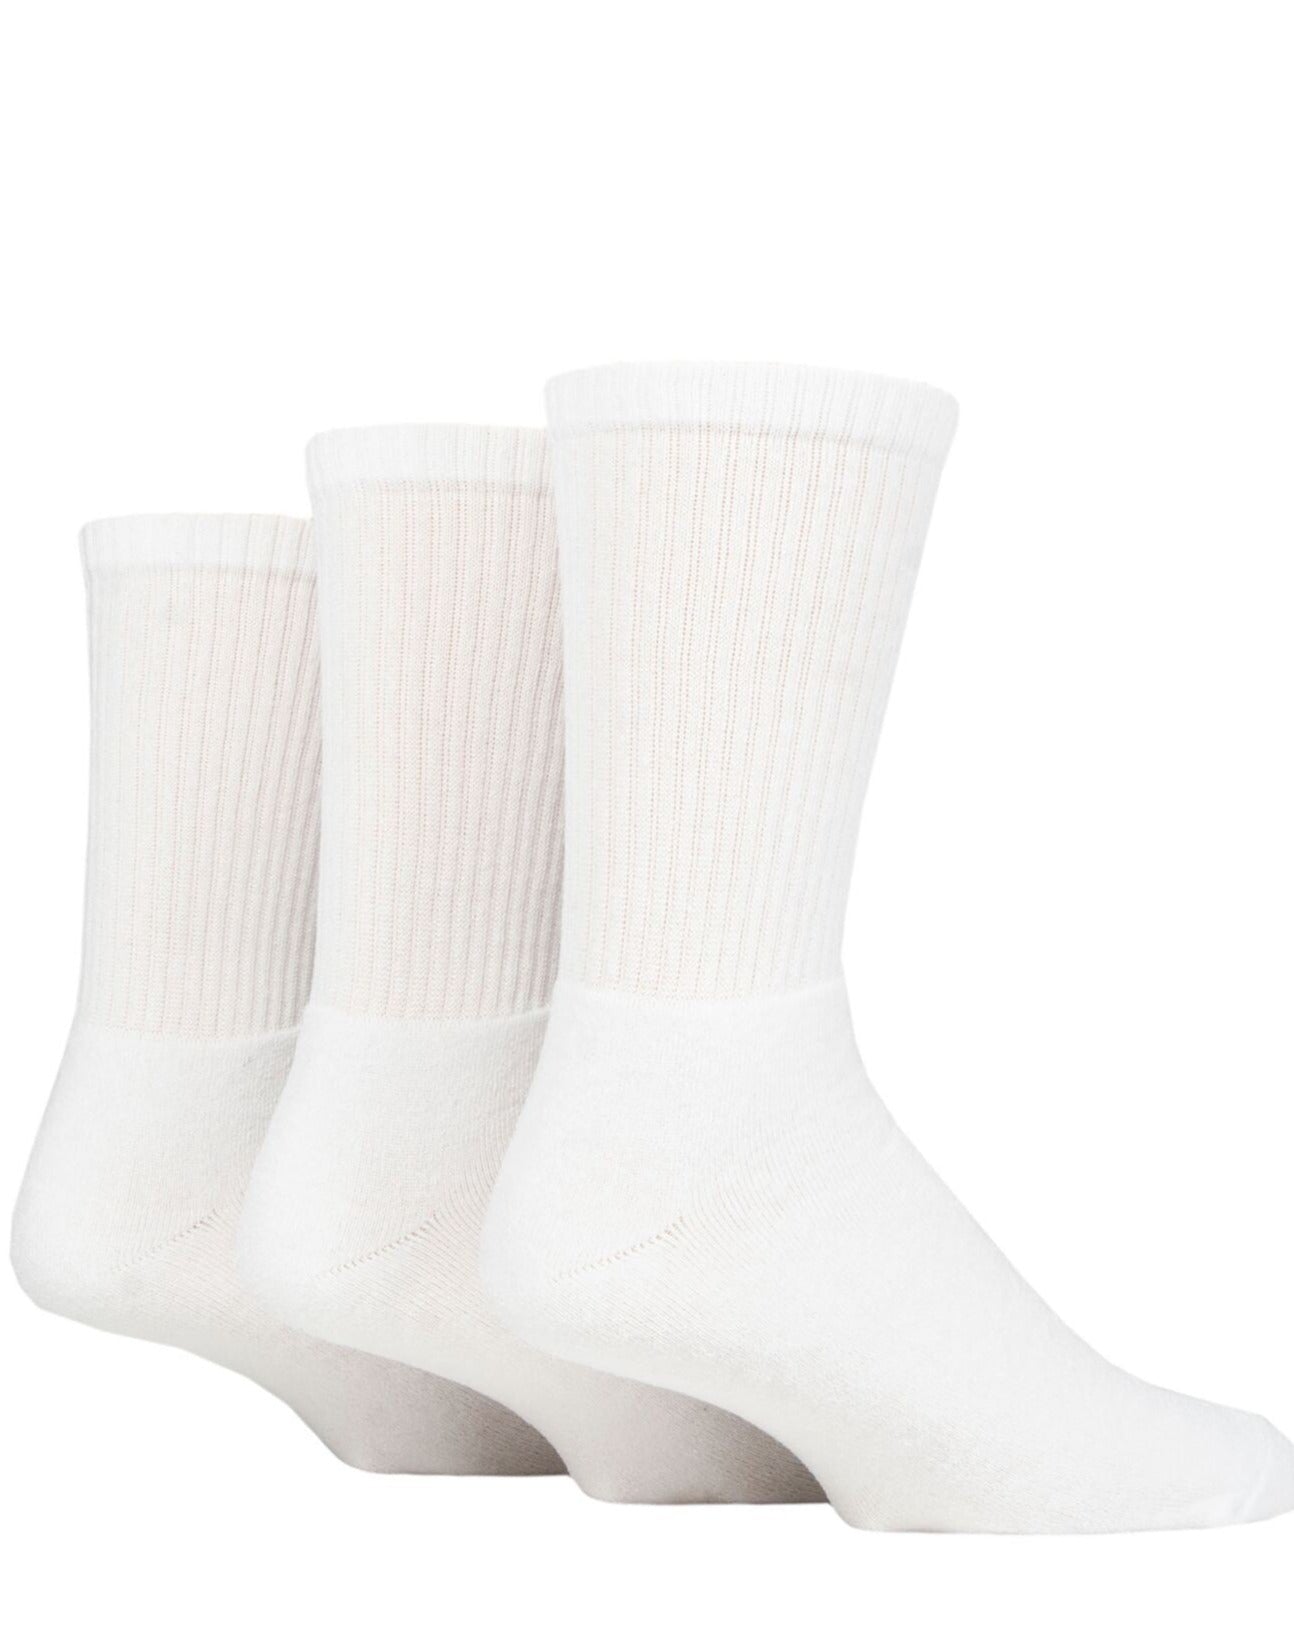 TORE 3Pk 100% Recycled Cotton Plain Crew Sports Socks - Men's